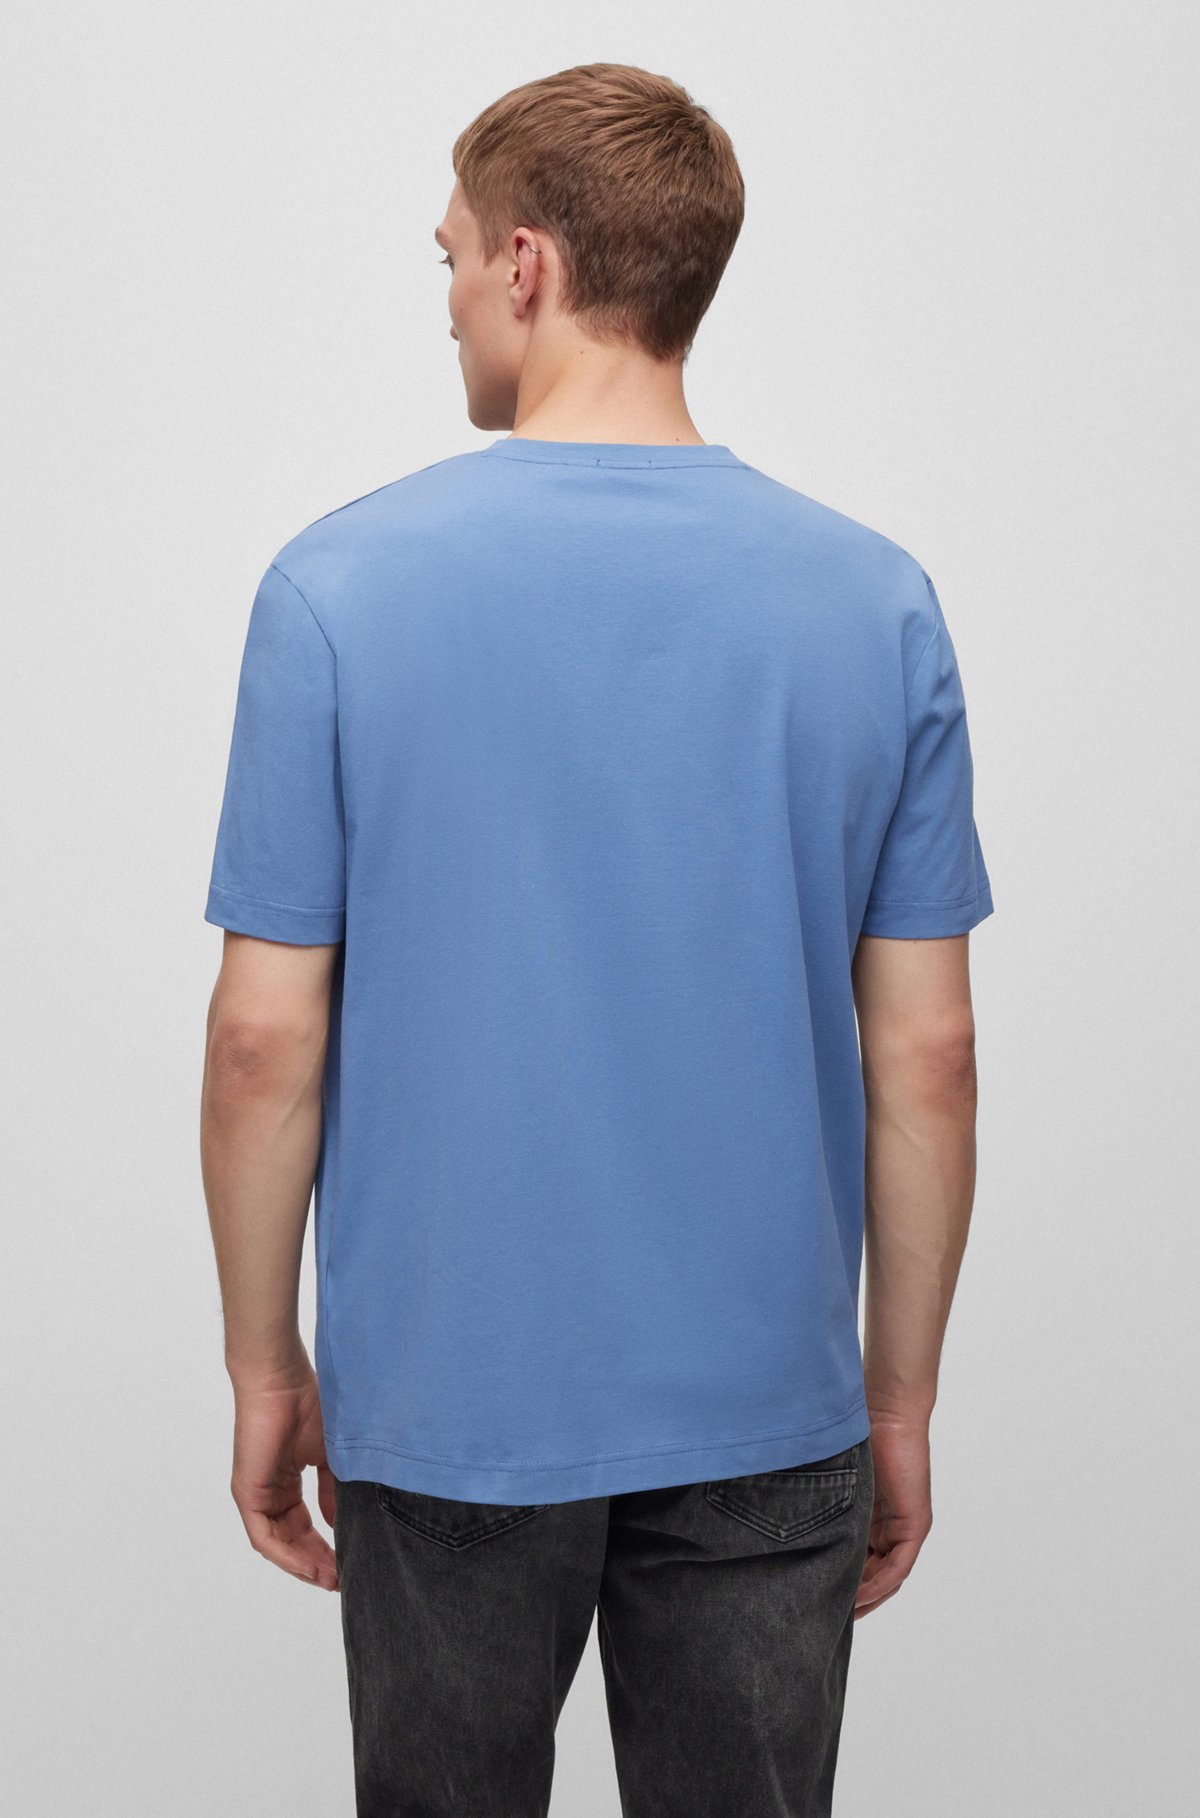 Camiseta relaxed fit de algodón elástico con logo estampado, Celeste